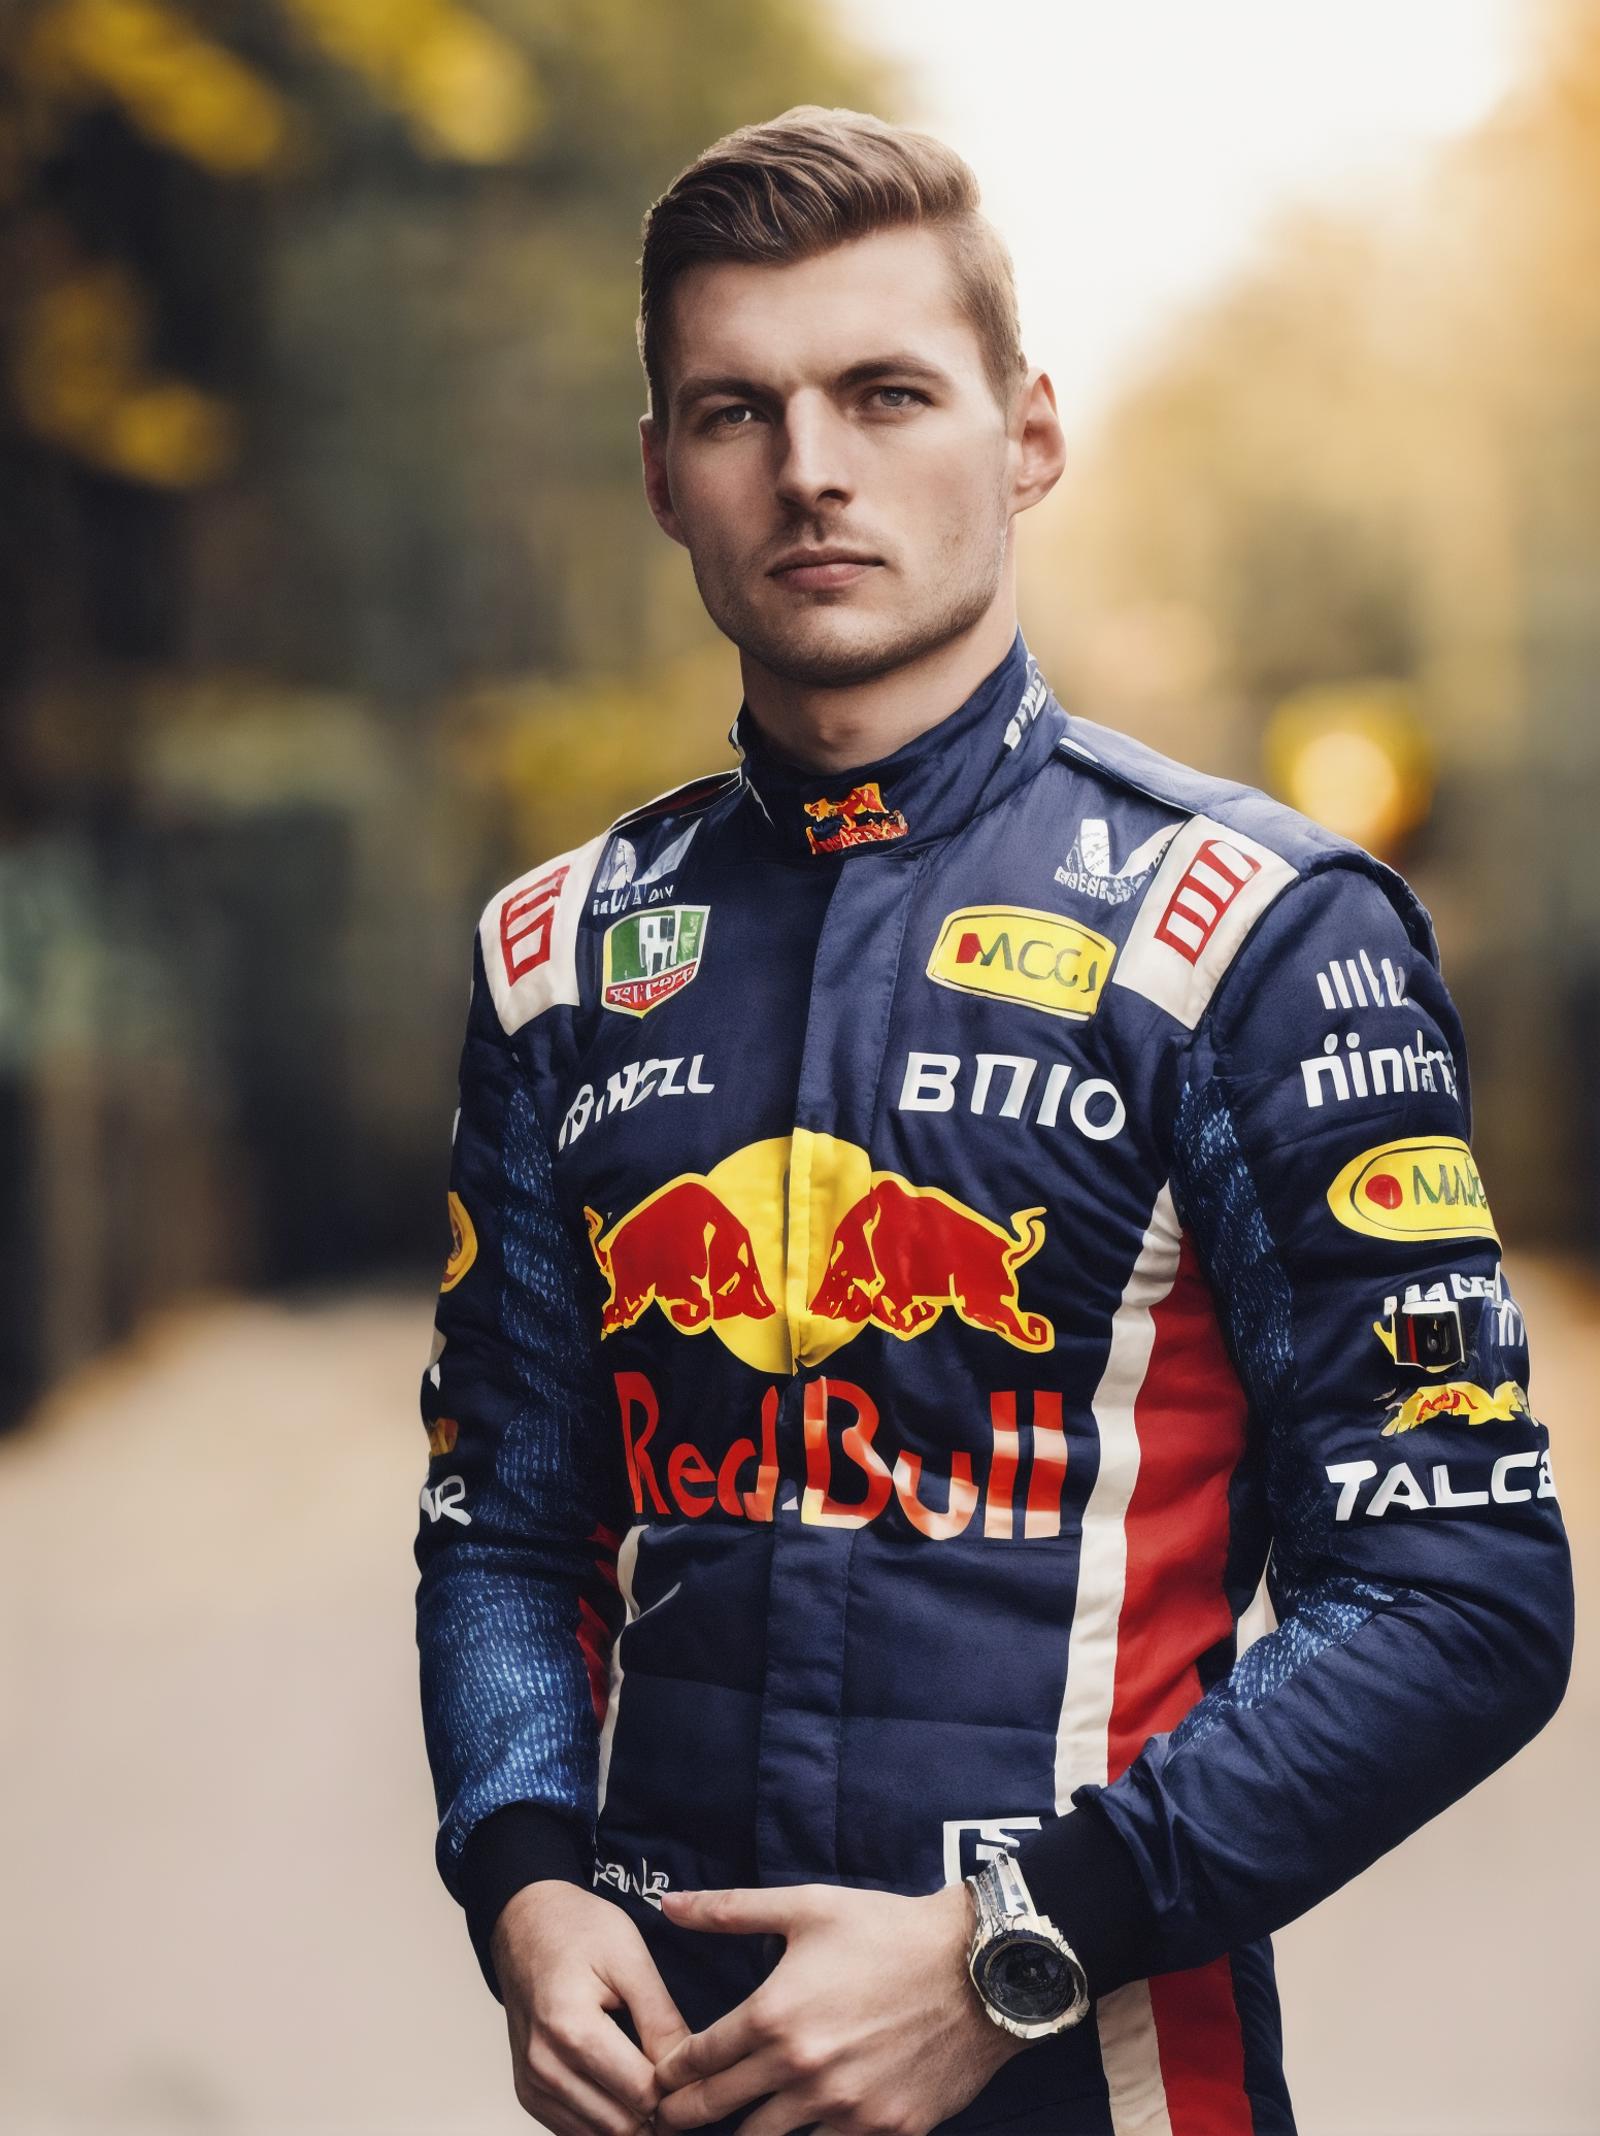 Max Verstappen - Formula 1 Racing driver image by MaiconAB